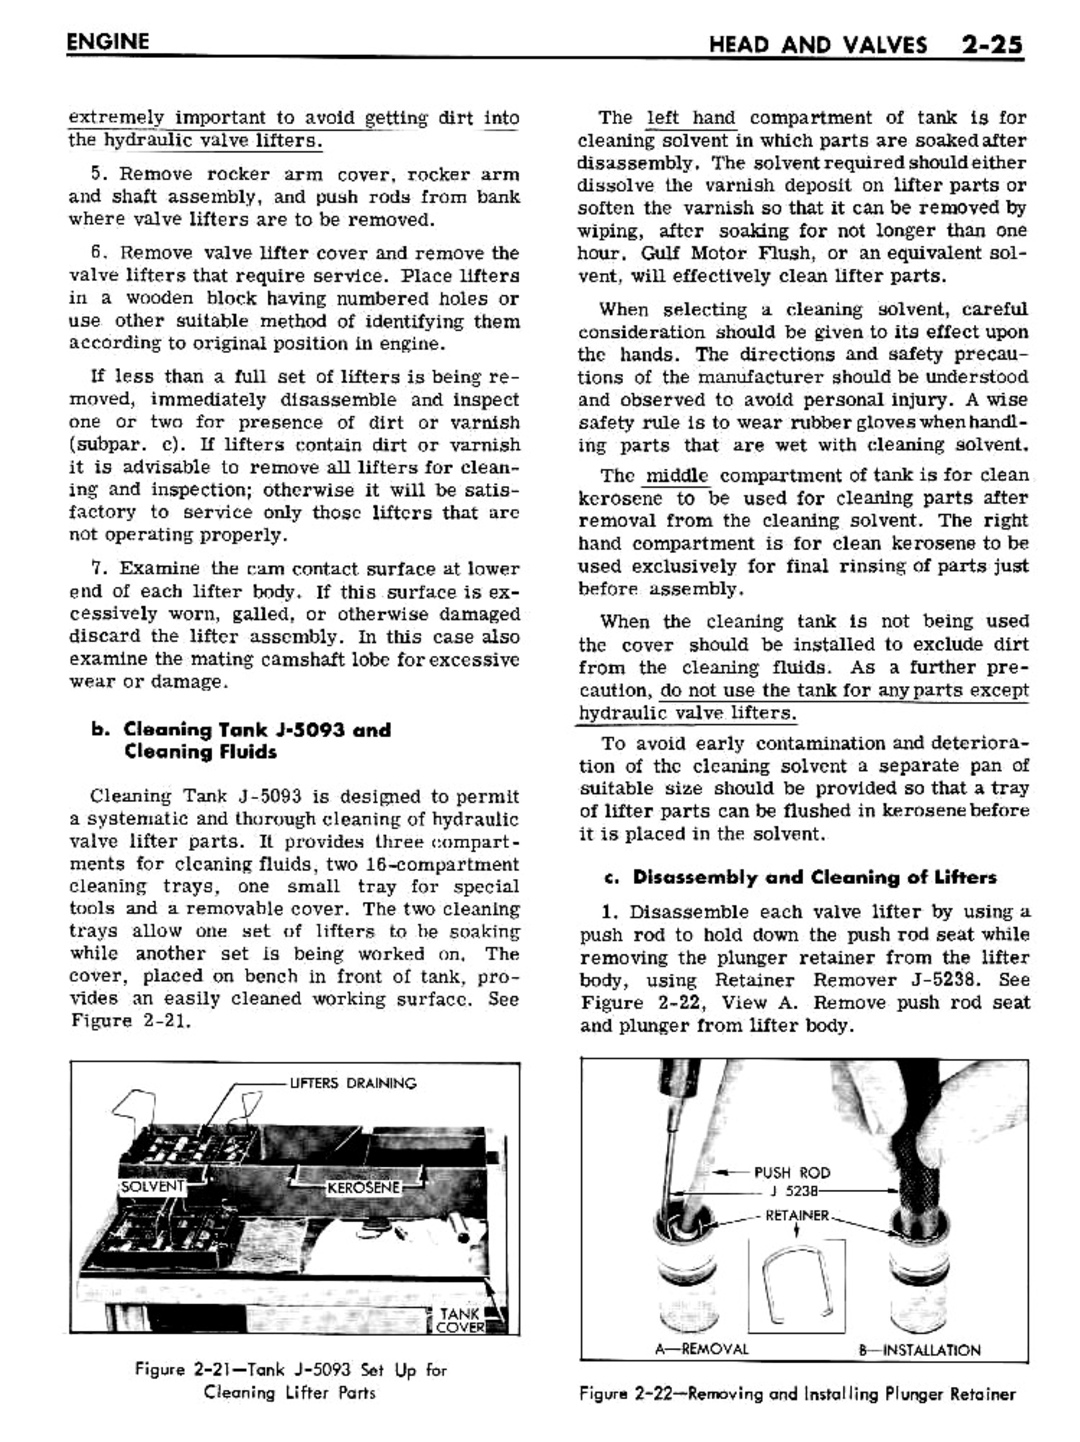 n_03 1961 Buick Shop Manual - Engine-025-025.jpg